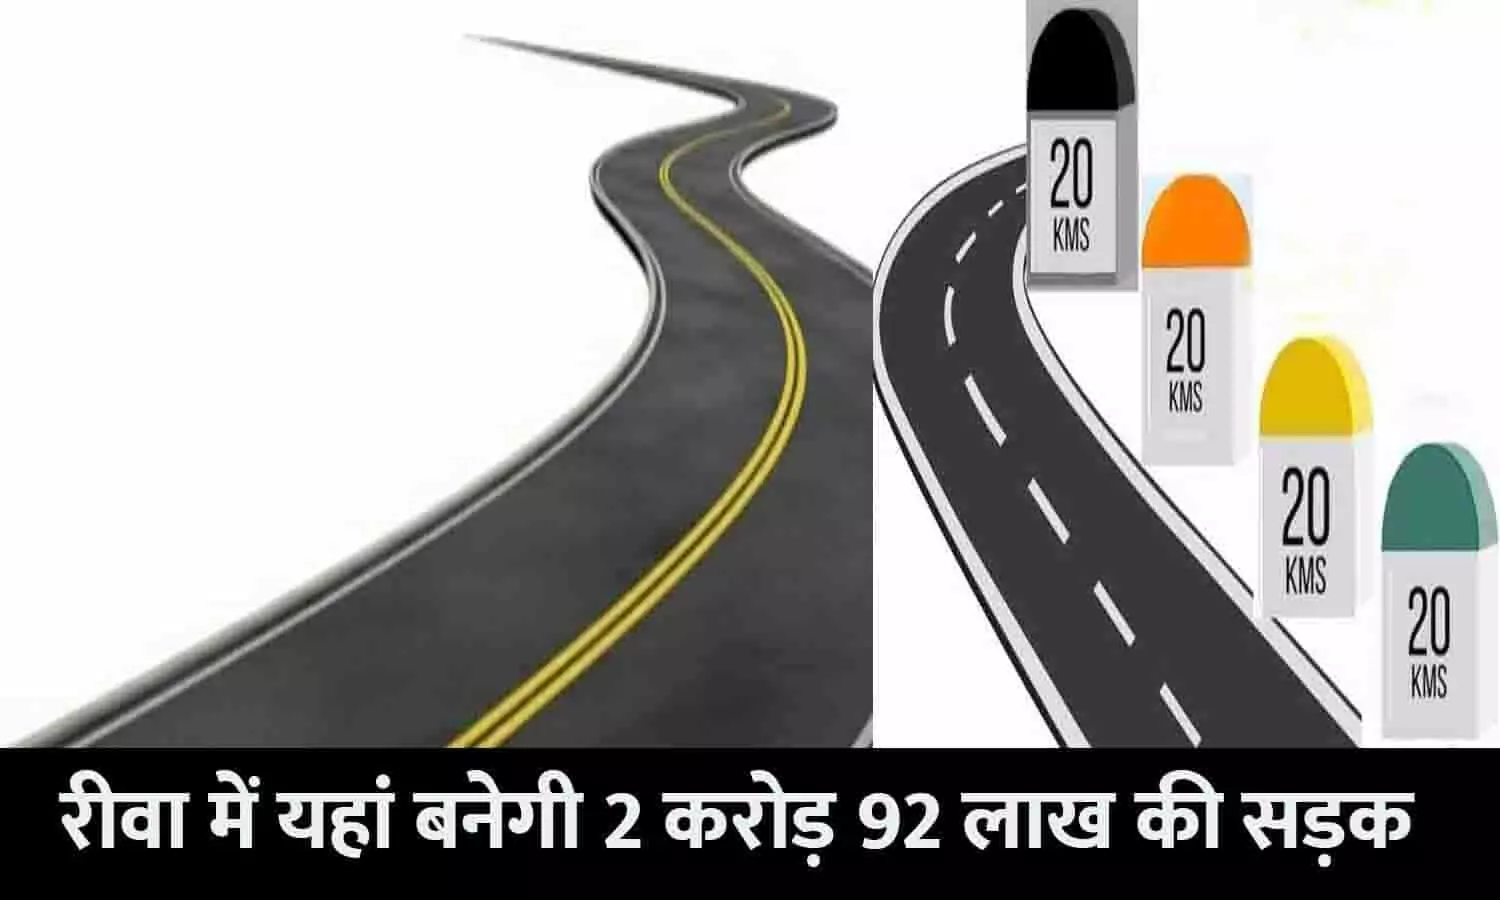 A road worth 2 crore 92 lakh